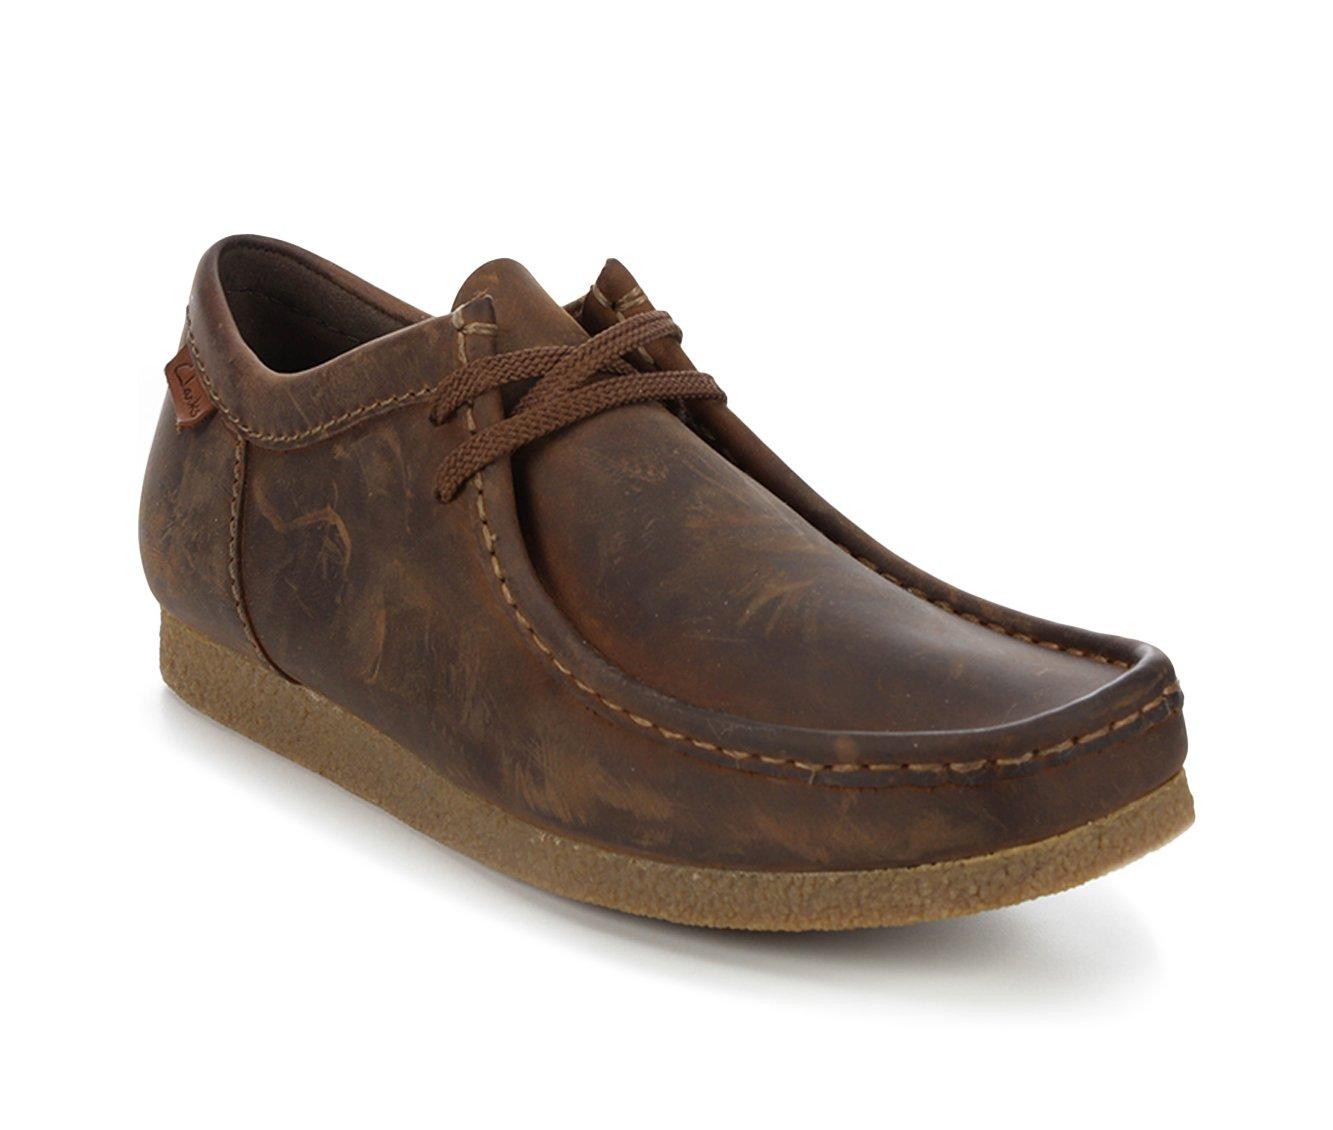 Clarks Moc Toe Shoes for Men